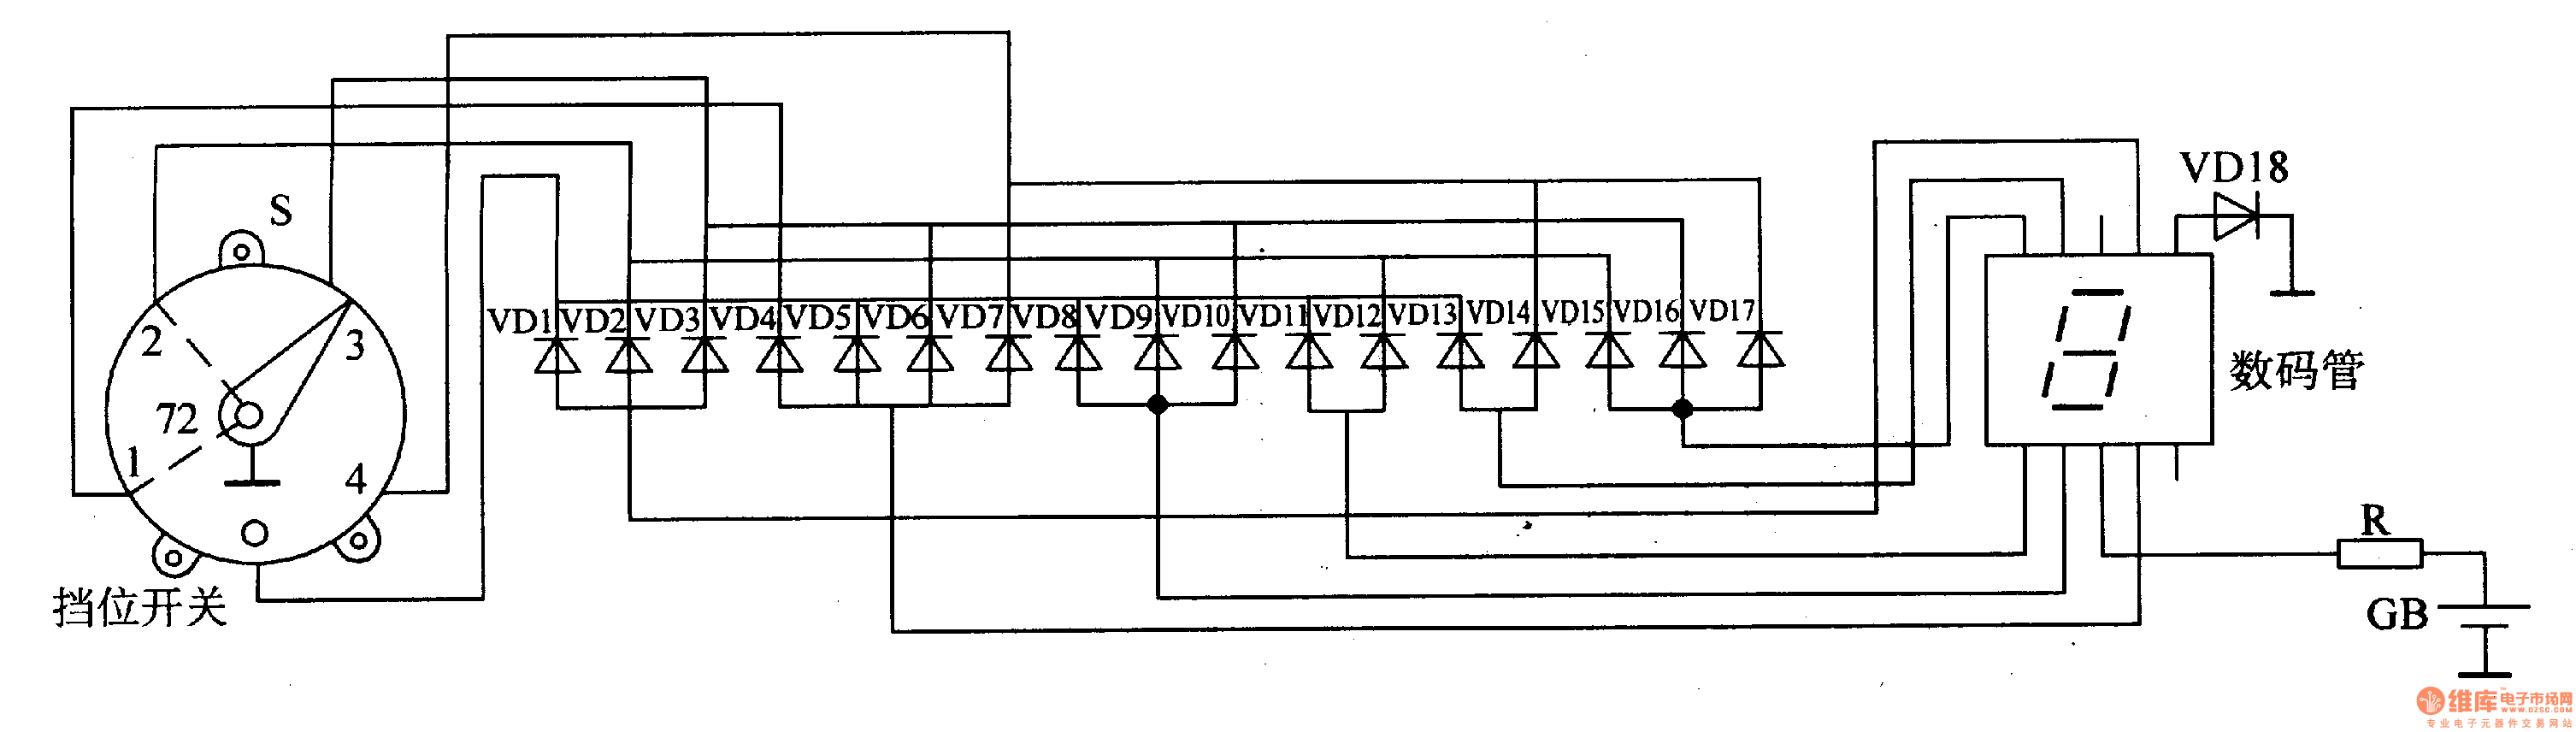 Motorcycle Gears Indicator (1) - Control_Circuit - Circuit Diagram